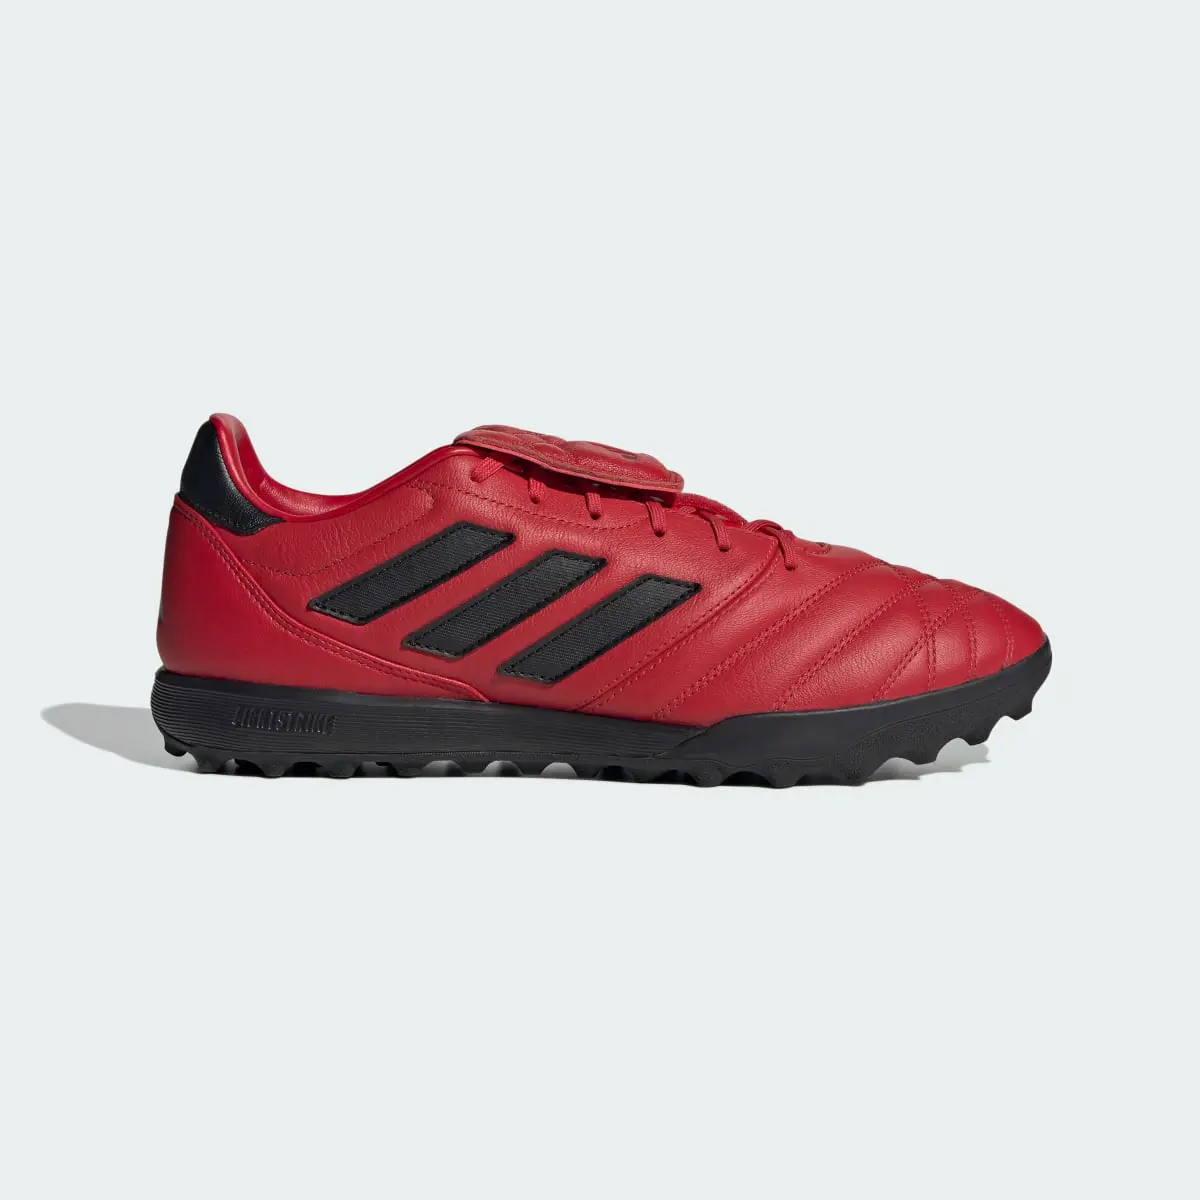 Adidas Copa Gloro Turf Boots. 2